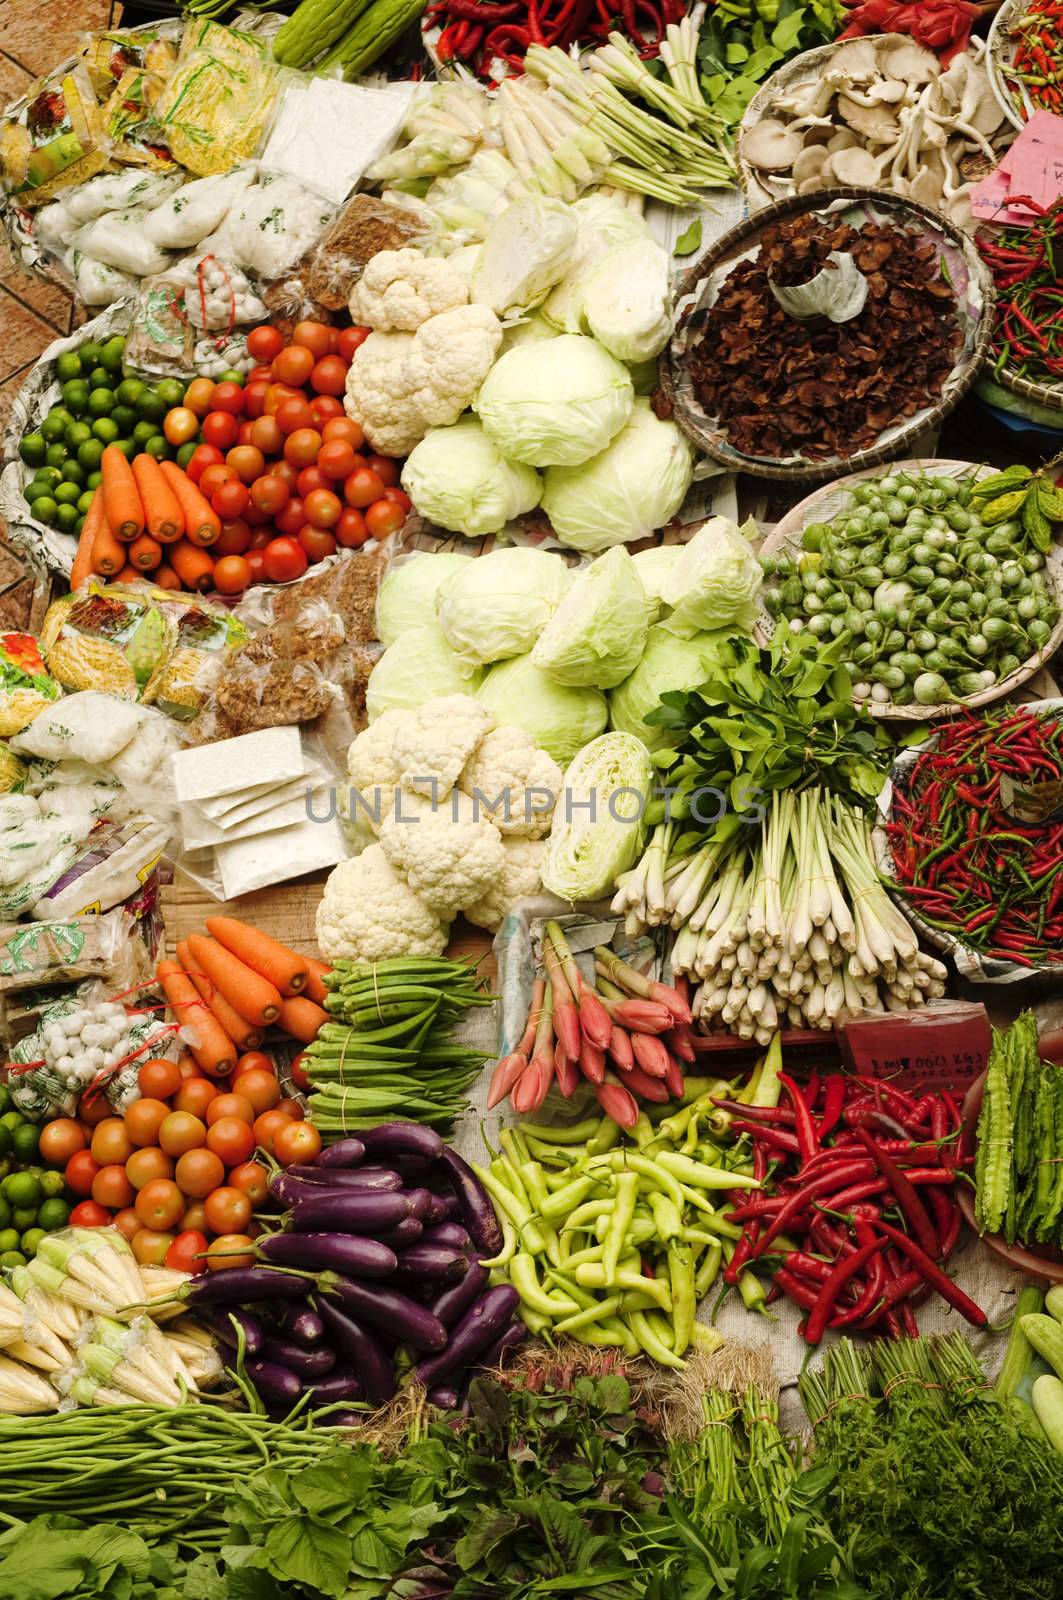 Asian fresh vegetables market at Kelantan State, Malaysia.